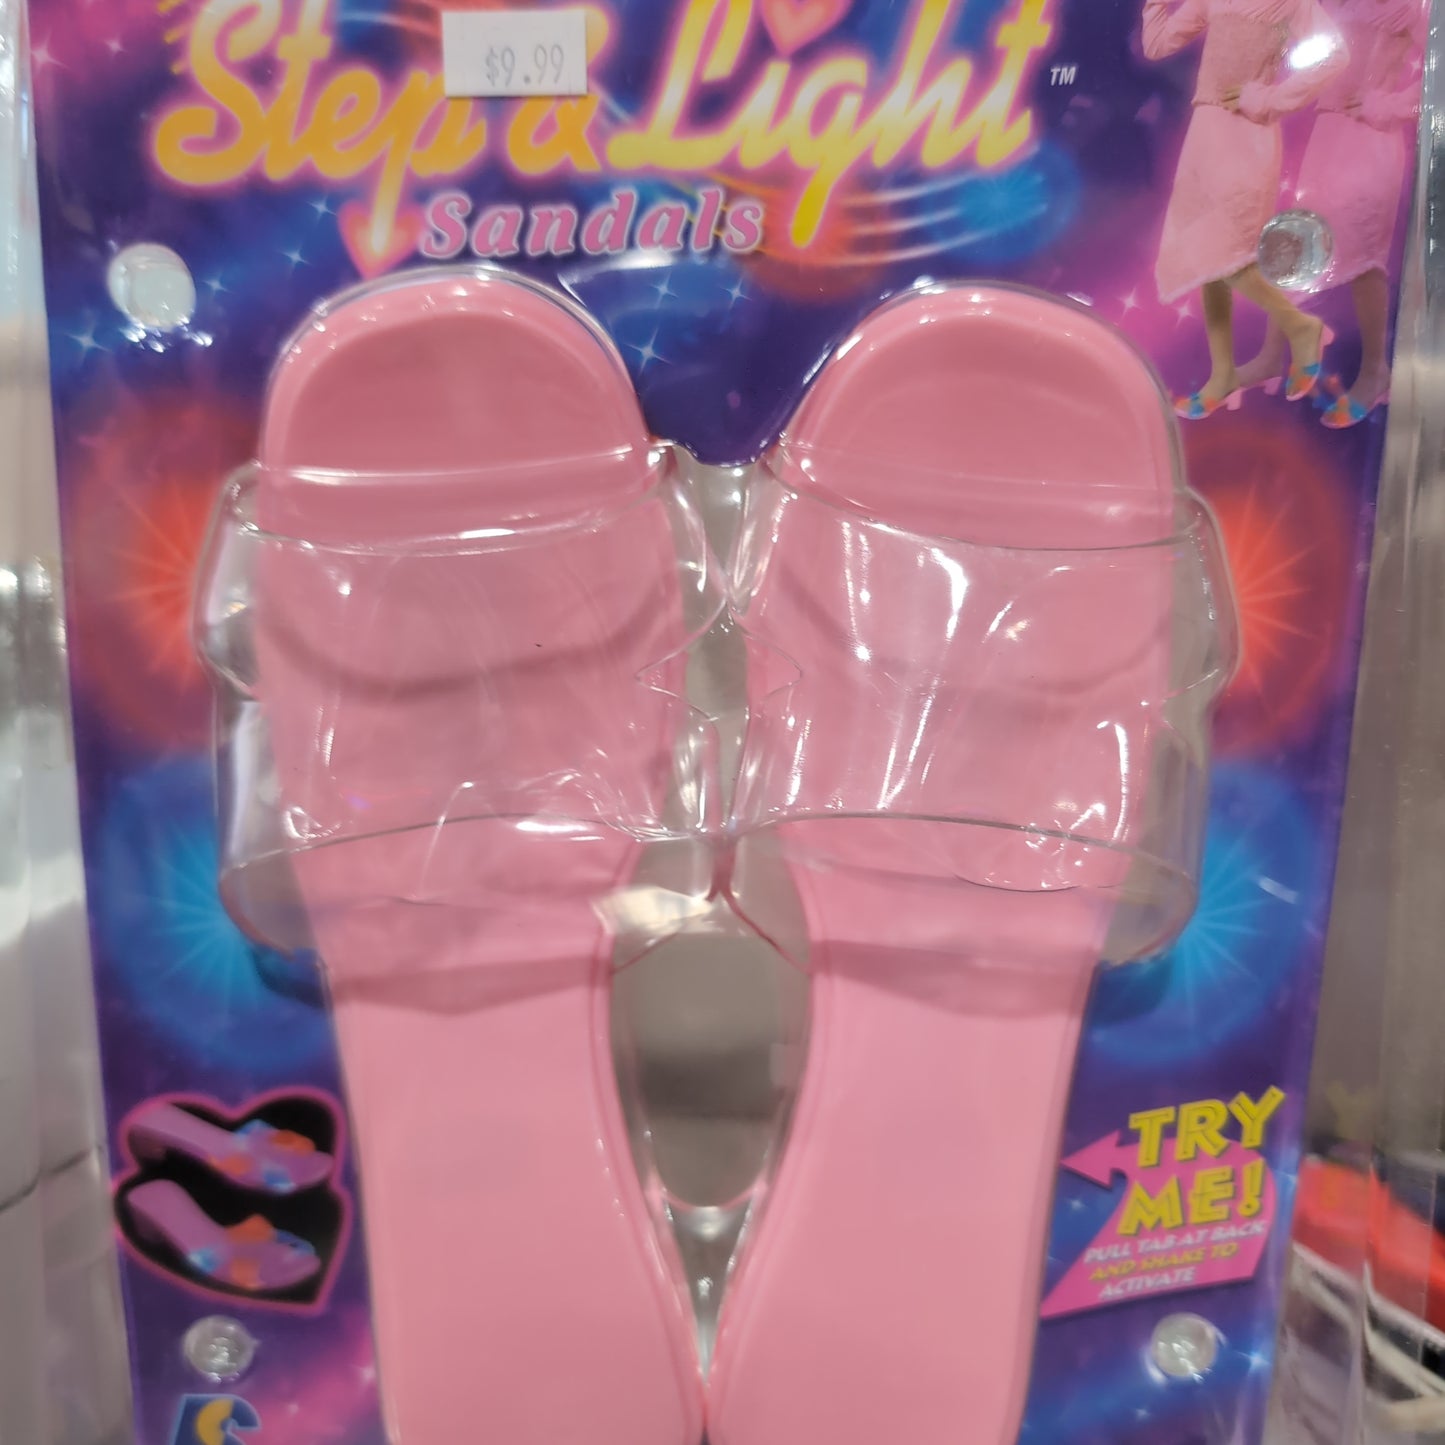 Step & Light Sandals Pink